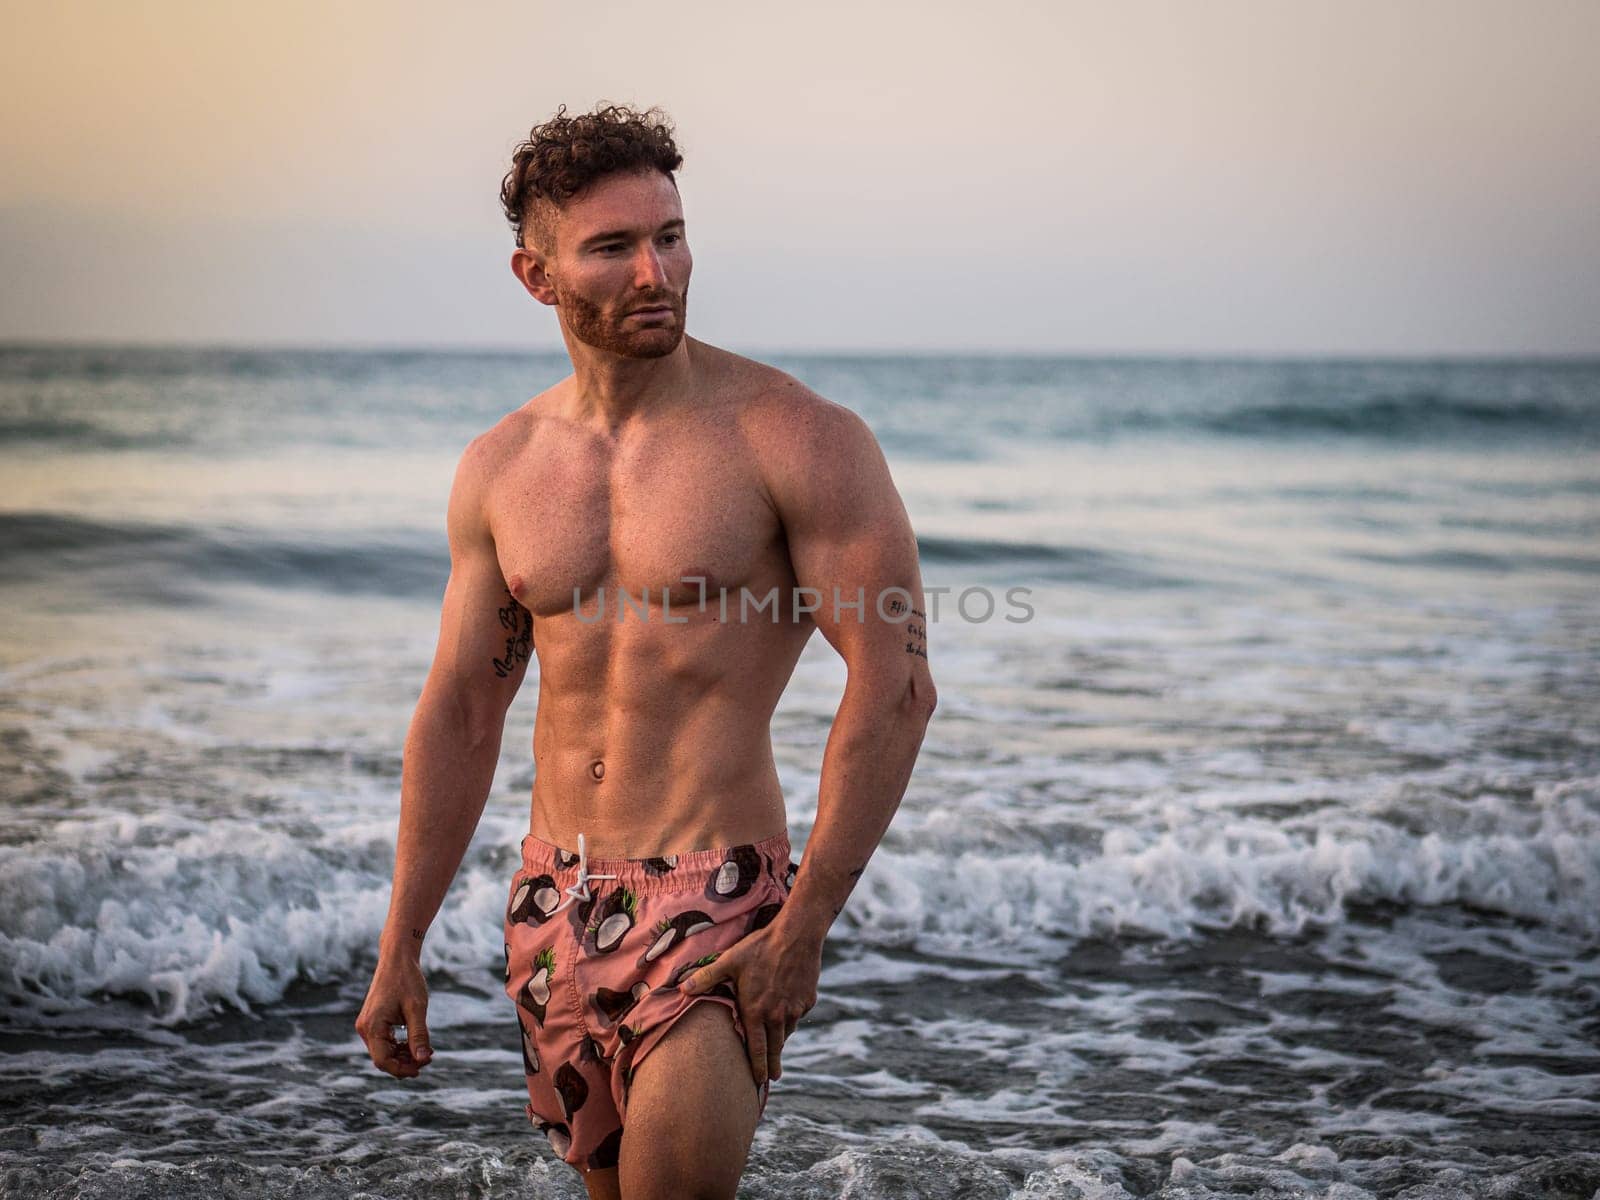 A shirtless muscular man walking into the ocean at dawn